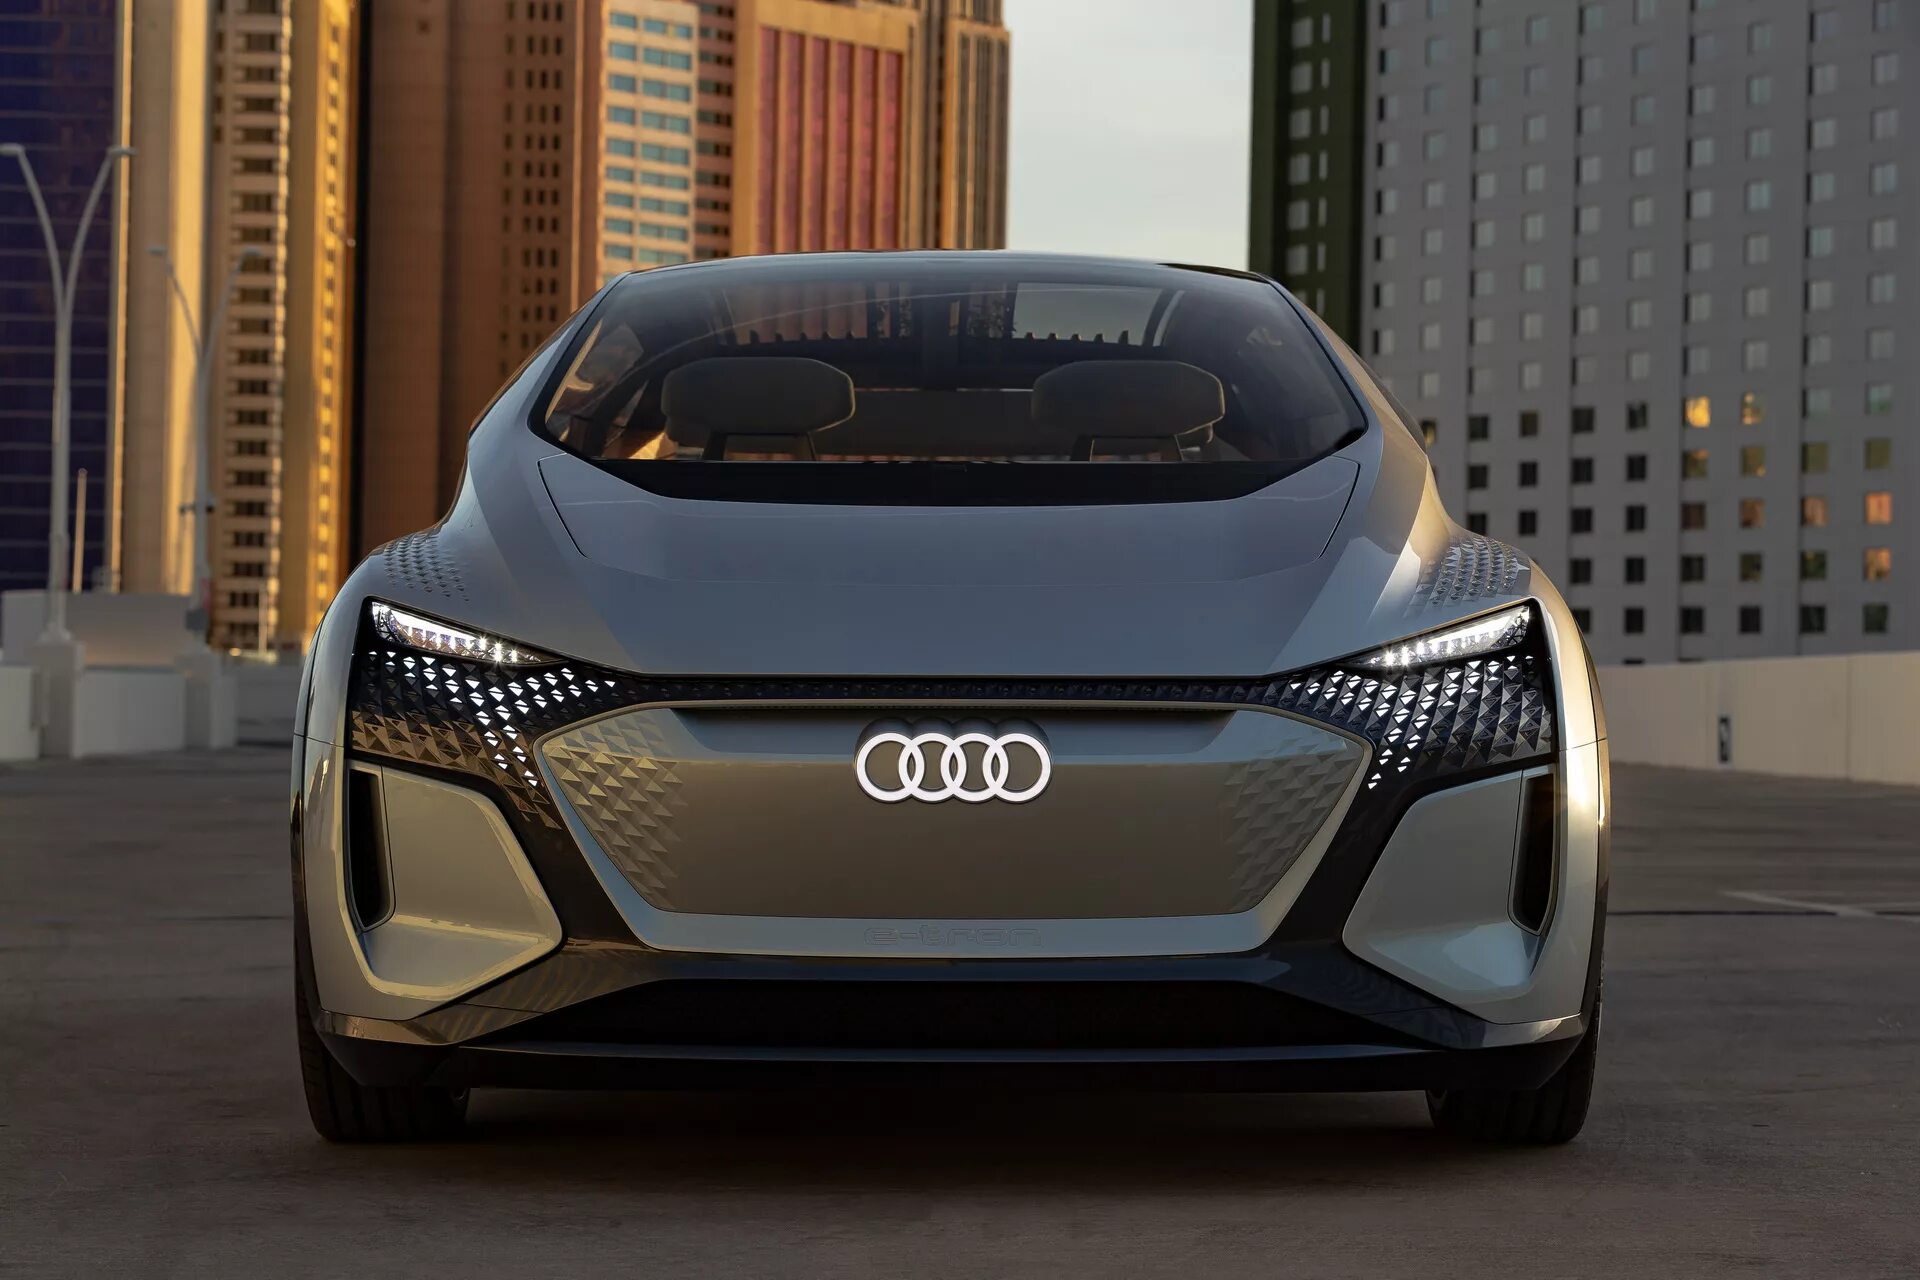 Ауди 2020 купить. Audi e-tron 2020 концепт. Audi rs9 Concept. Ауди новая модель 2020. Концепт Ауди электрокар.